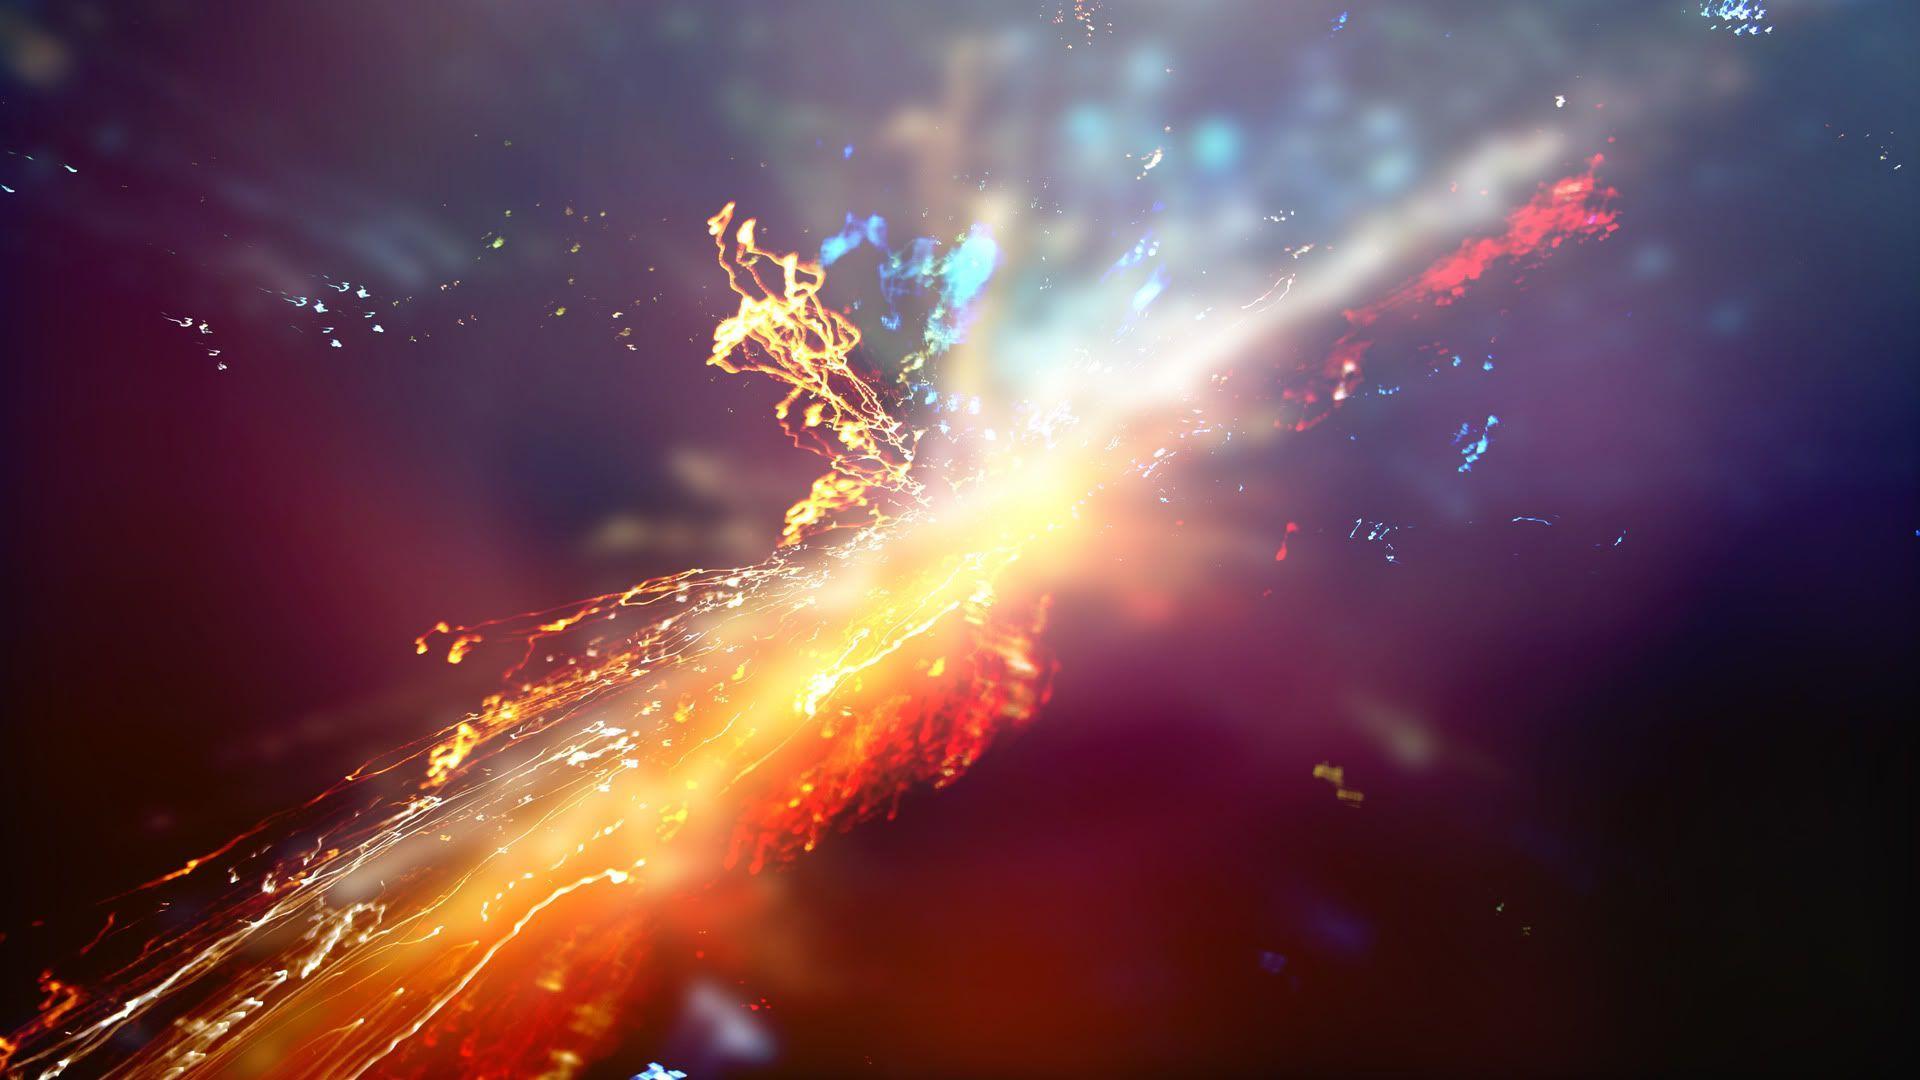 Supernova Wallpaper, HD Quality Supernova Image, Supernova